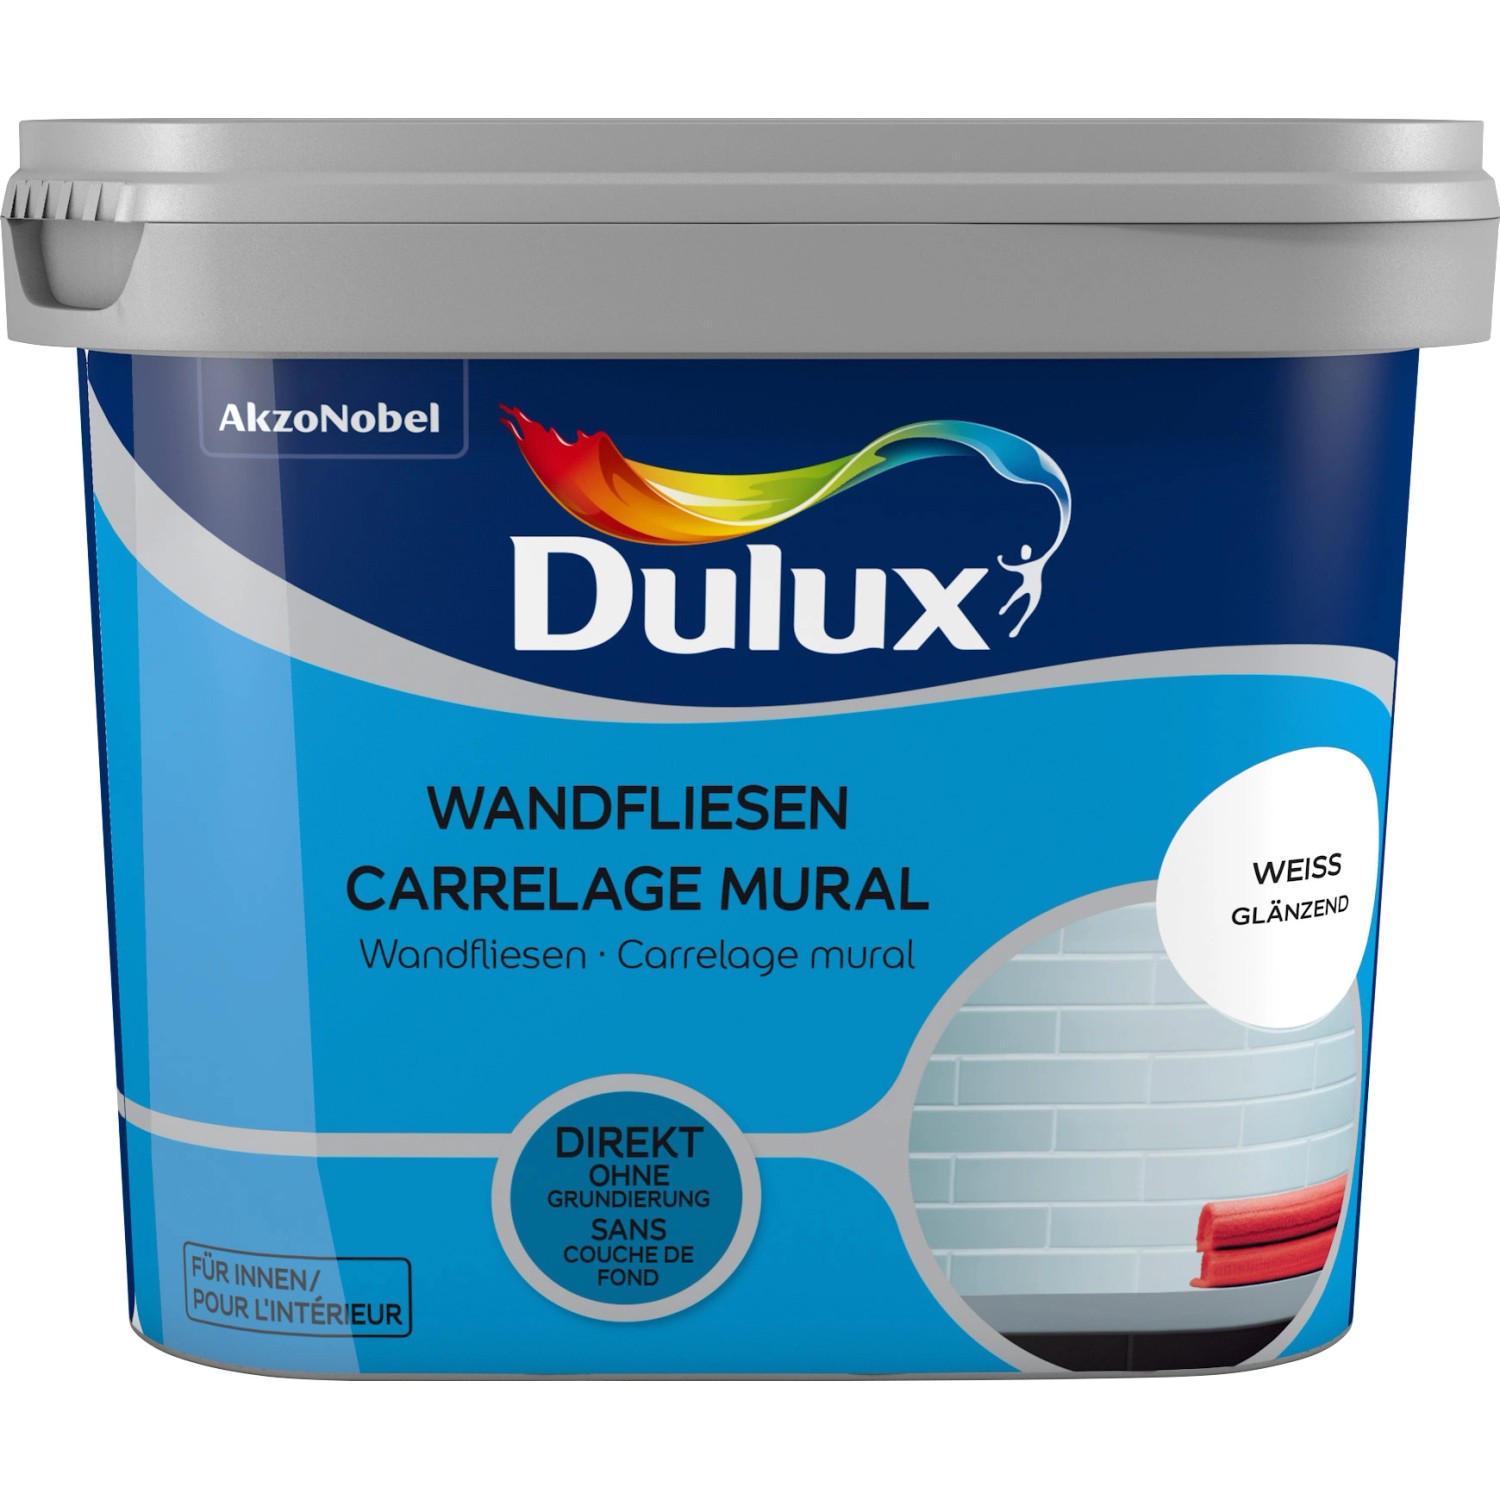 Dulux Fresh Up Wandfliesenlack Glänzend Weiß 750 ml